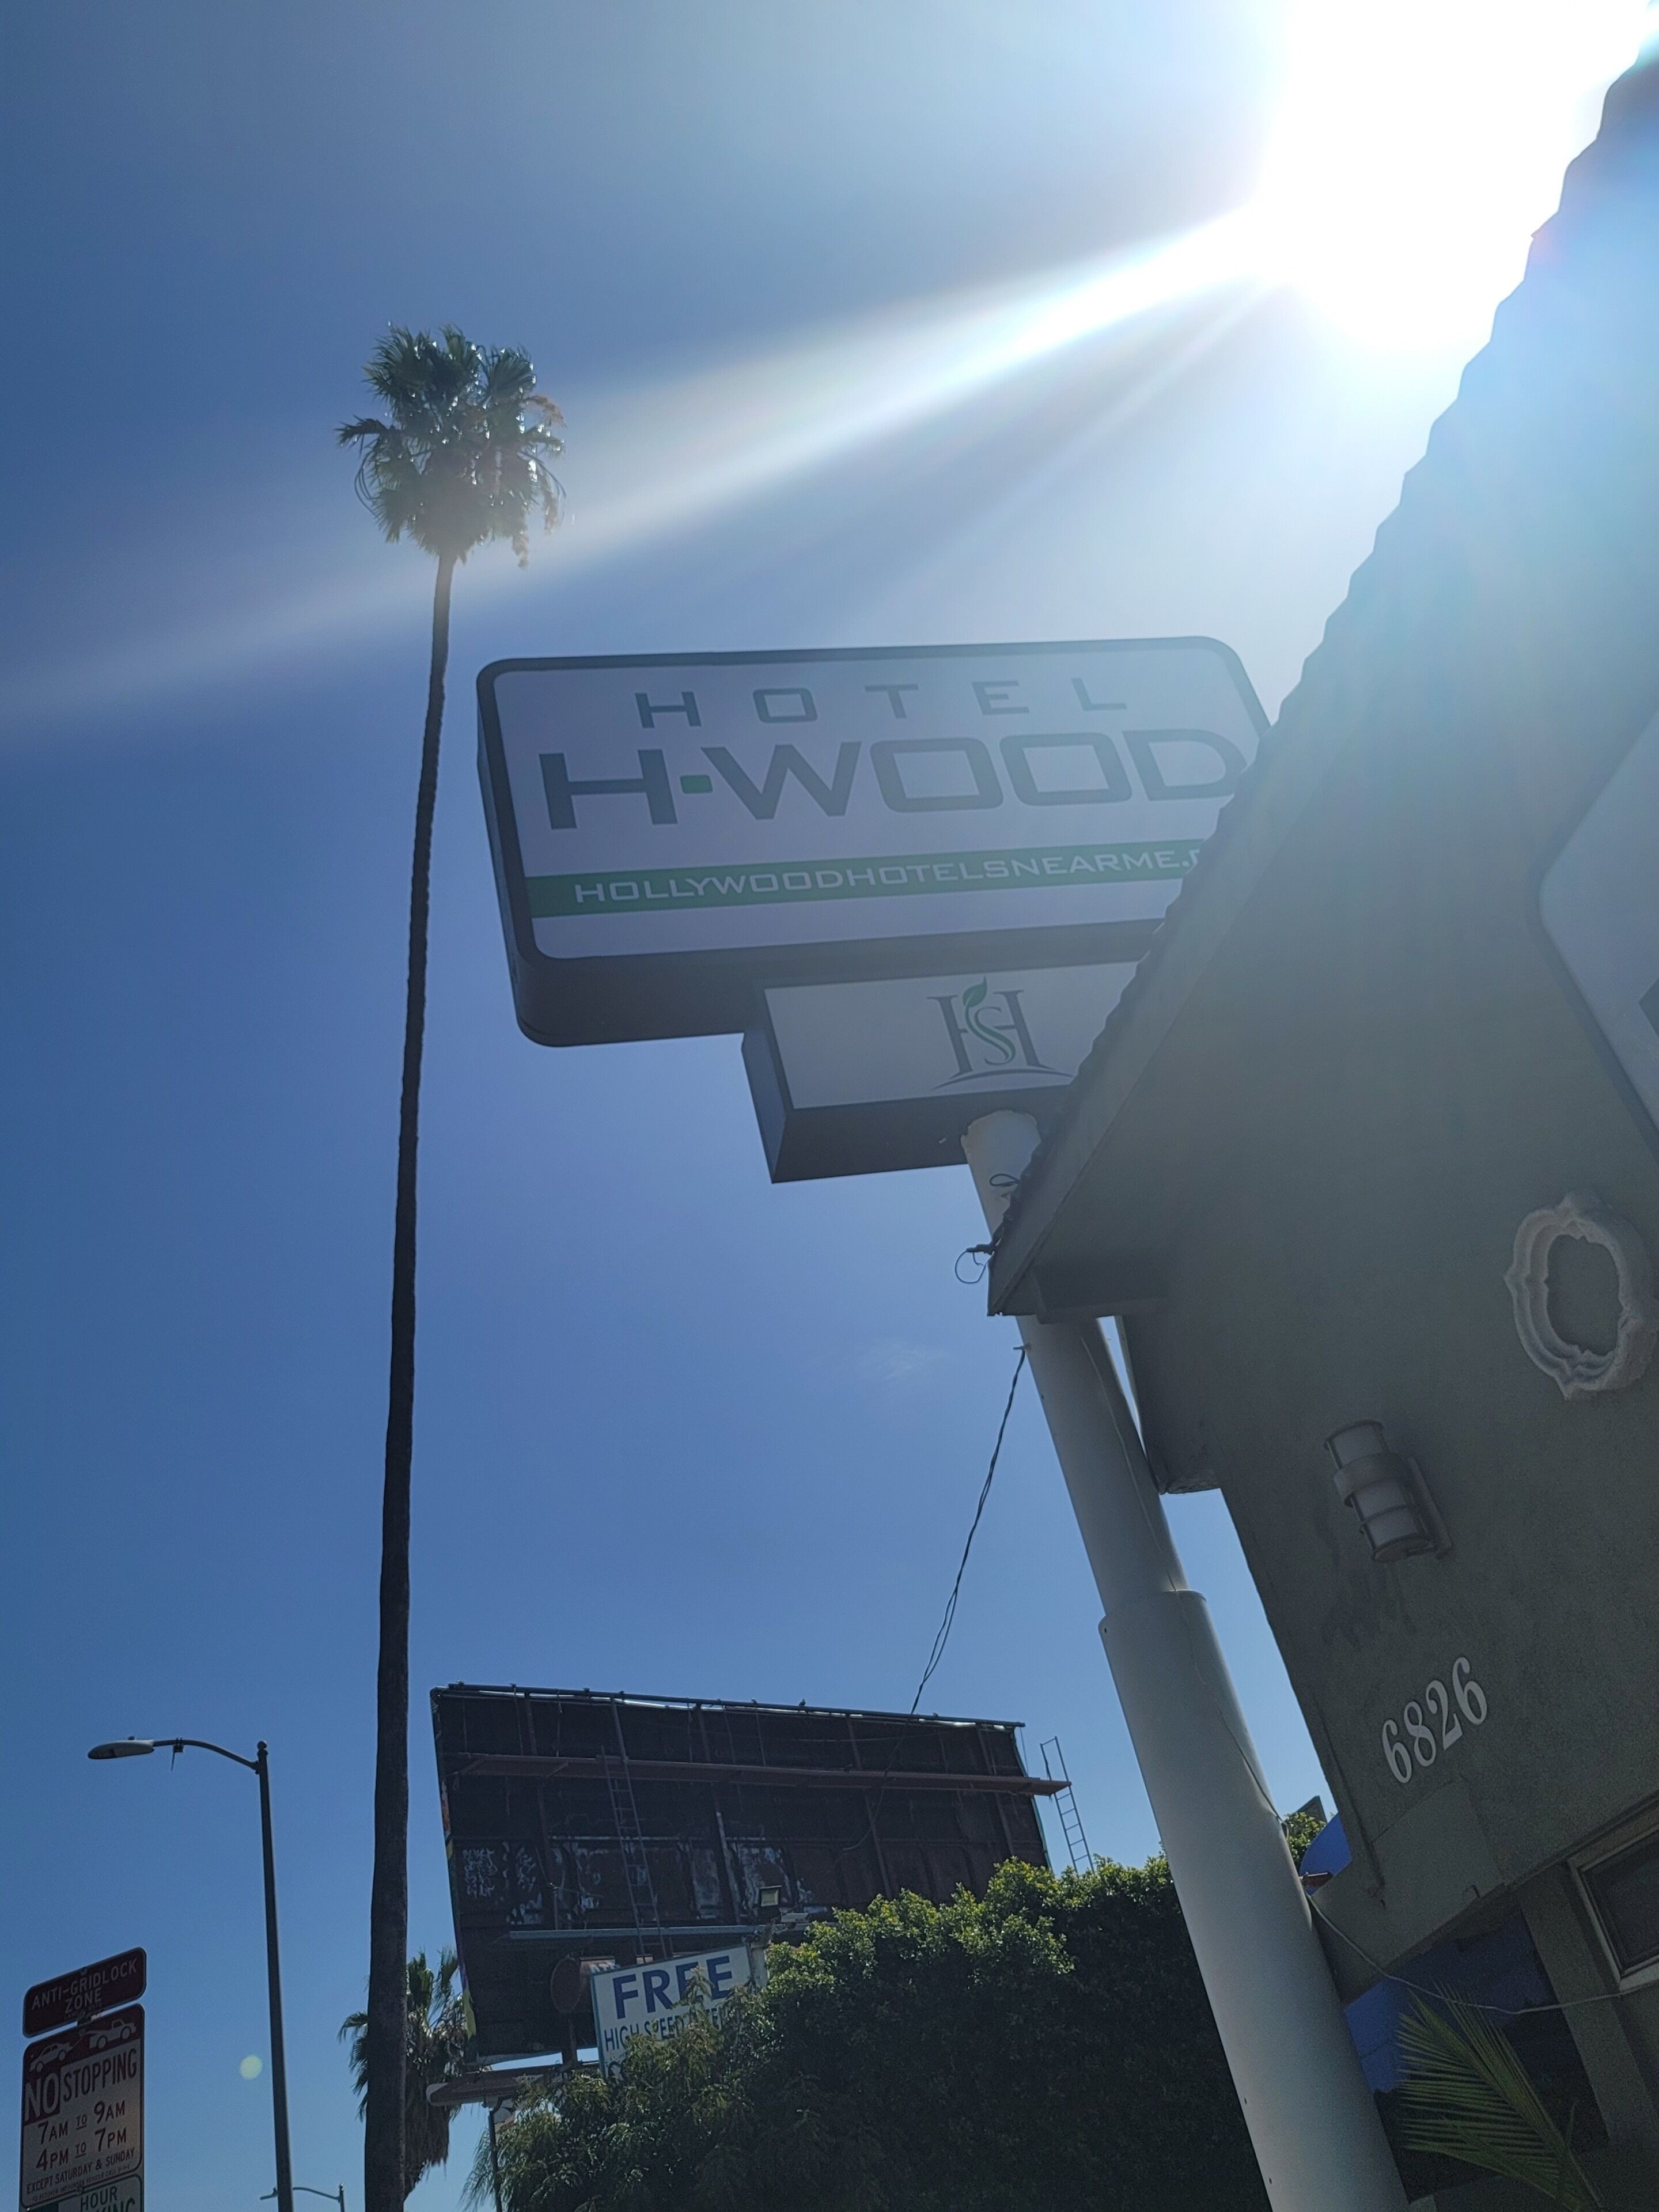 Hotel Hwood